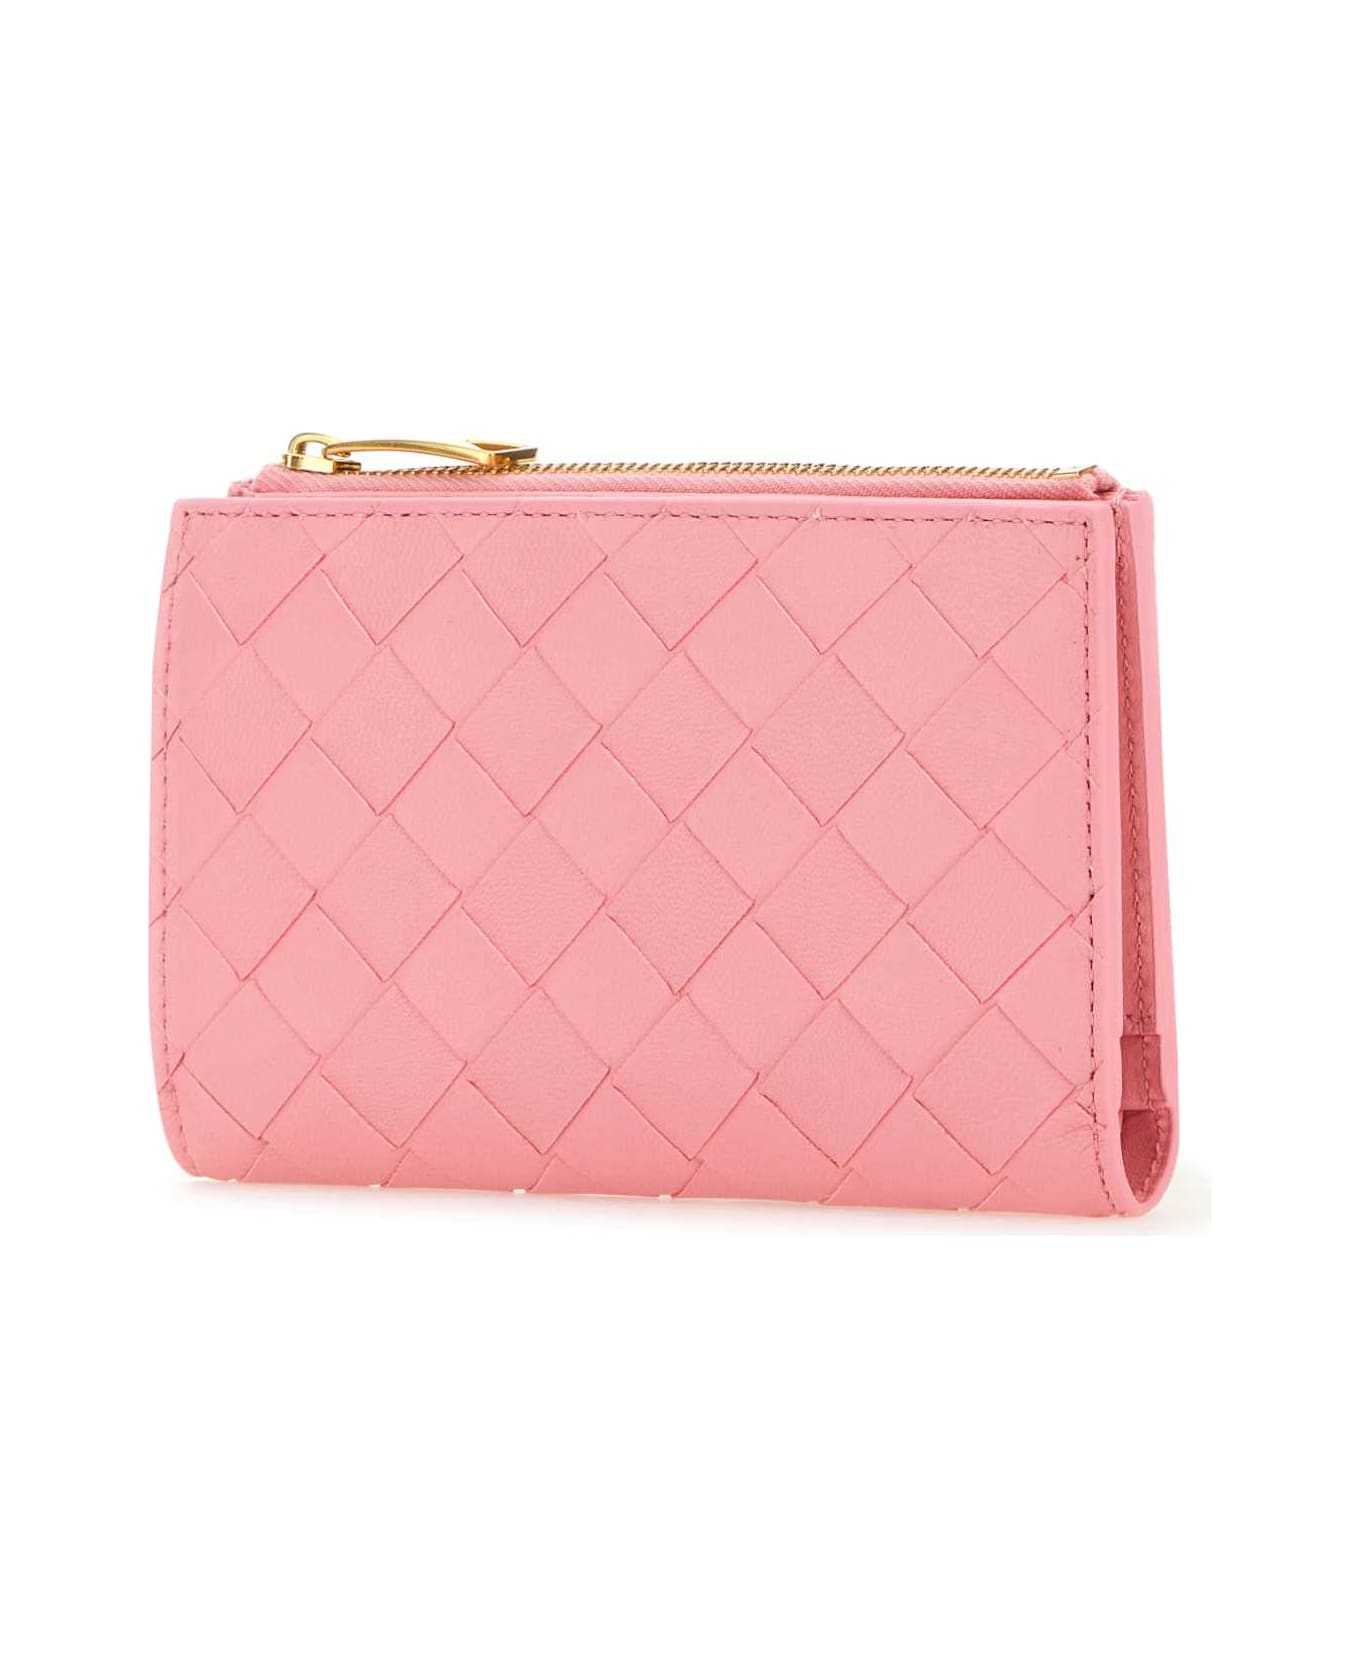 Bottega Veneta Pink Nappa Leather Medium Intrecciato Wallet - PINK 財布